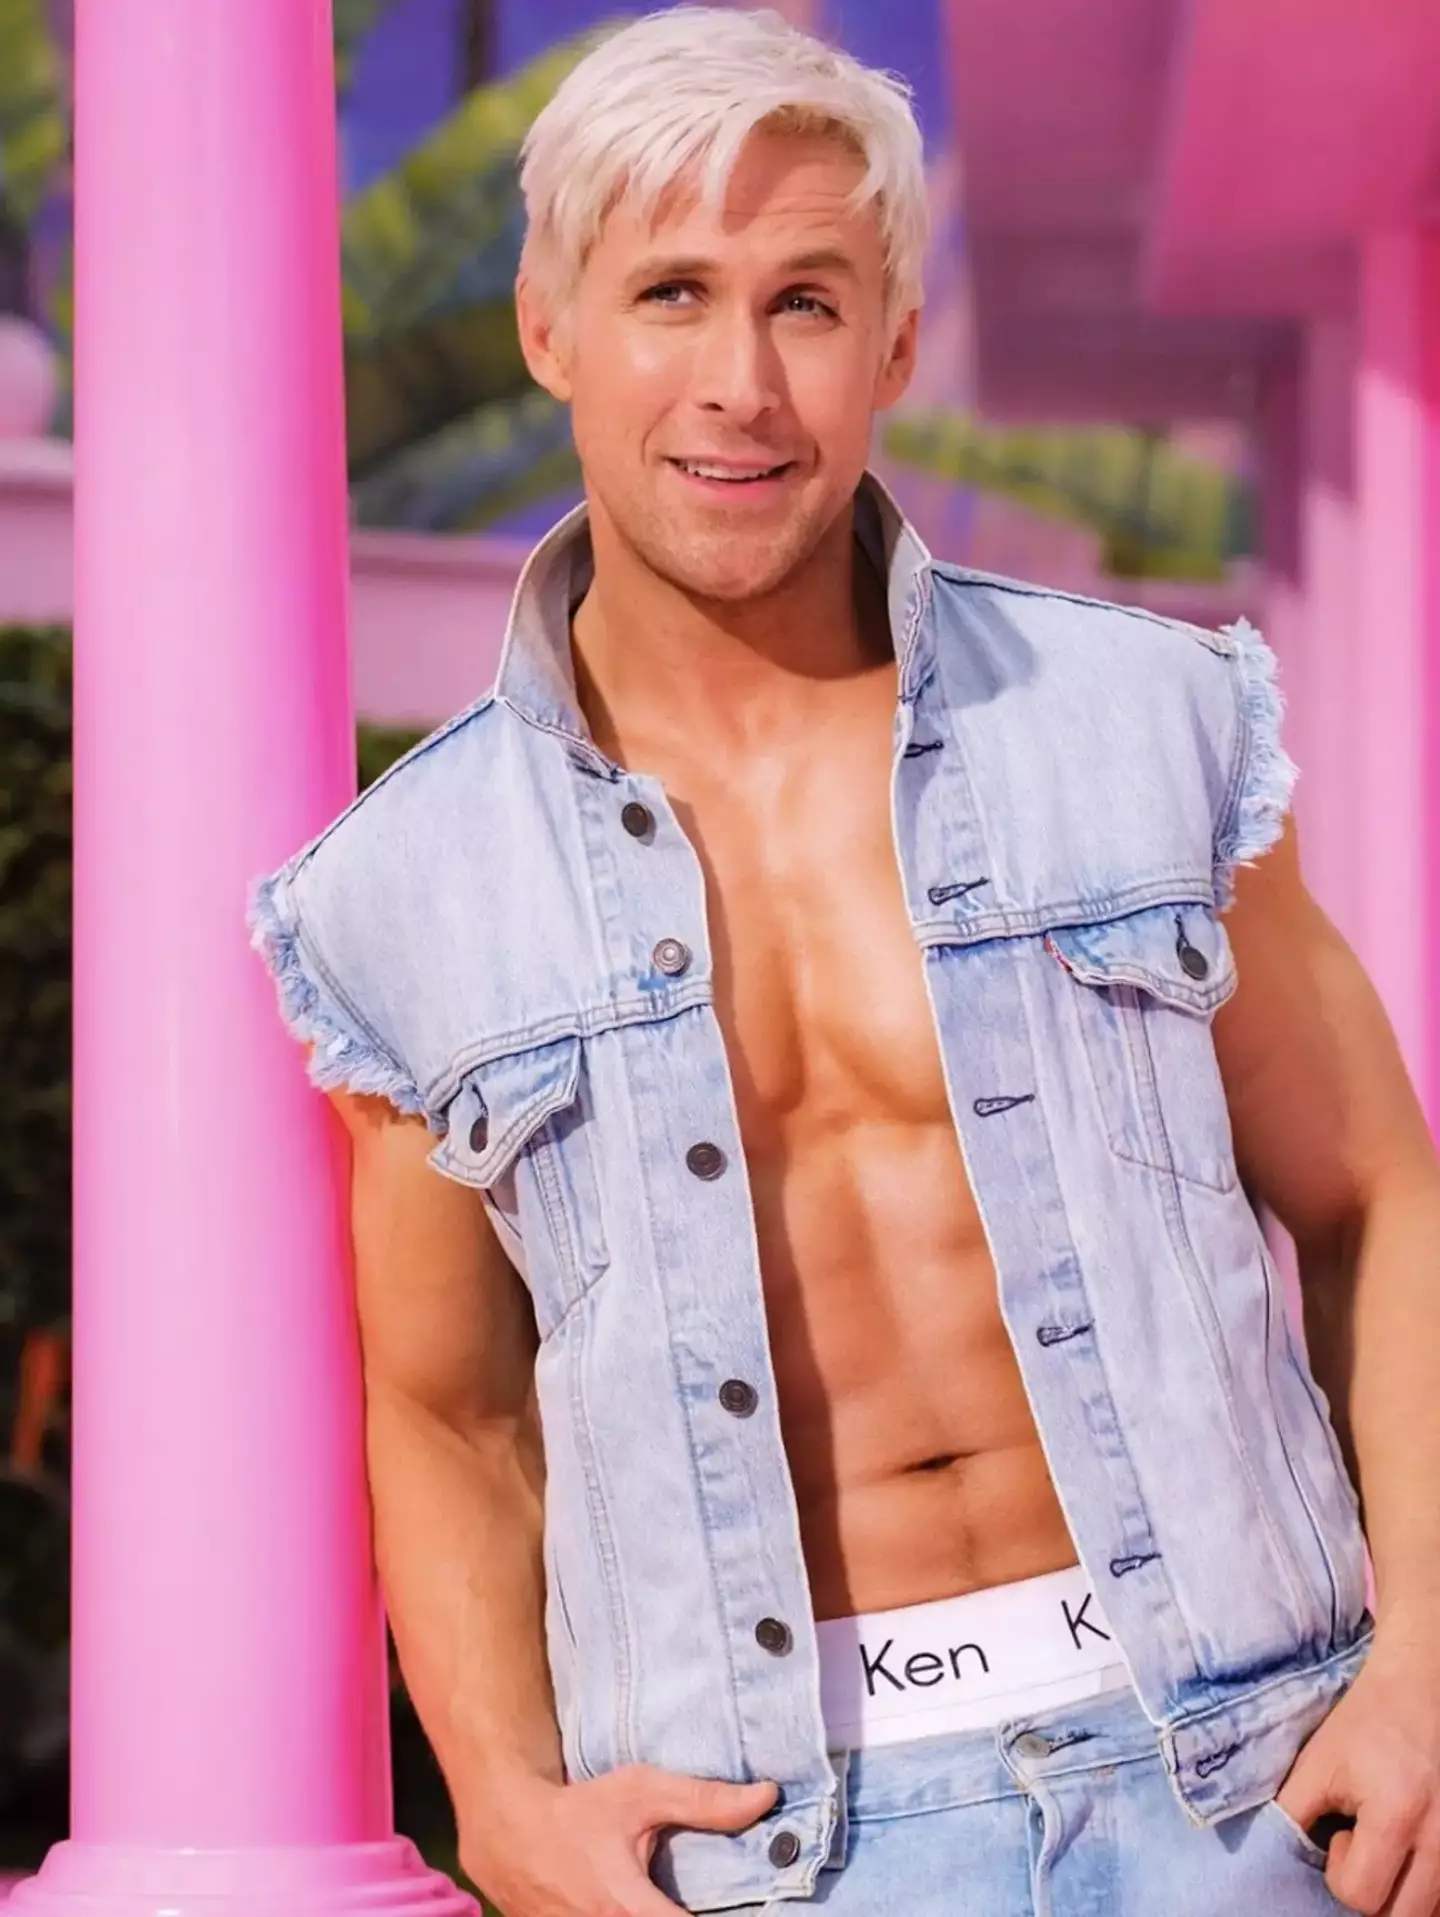 Ryan Gosling will star as Ken in the new Barbie movie.